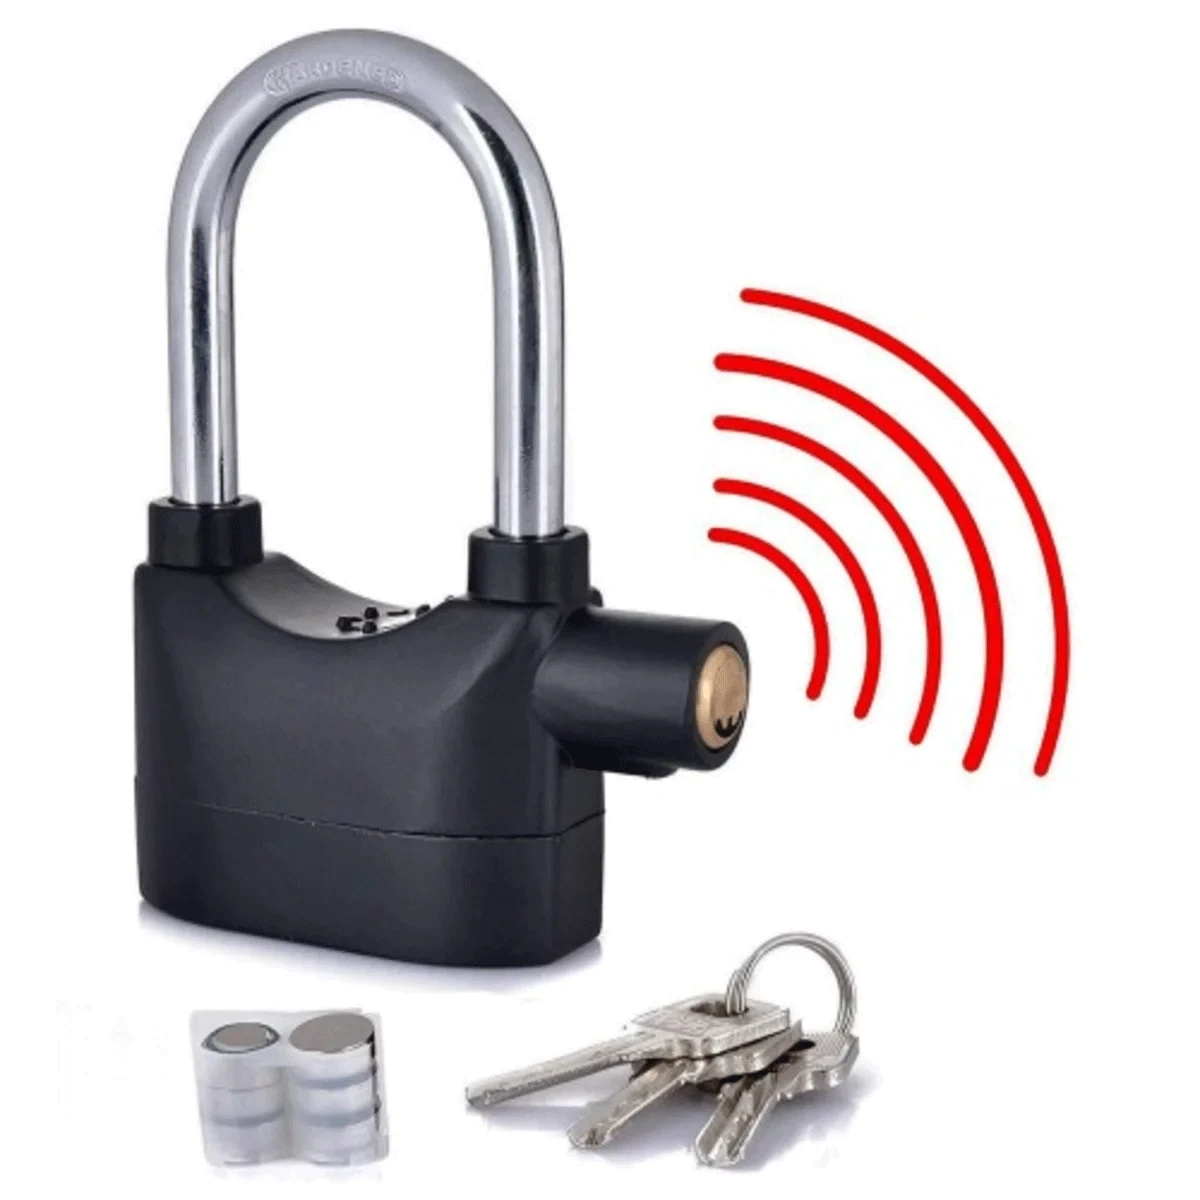 Smart Security Alarm Lock